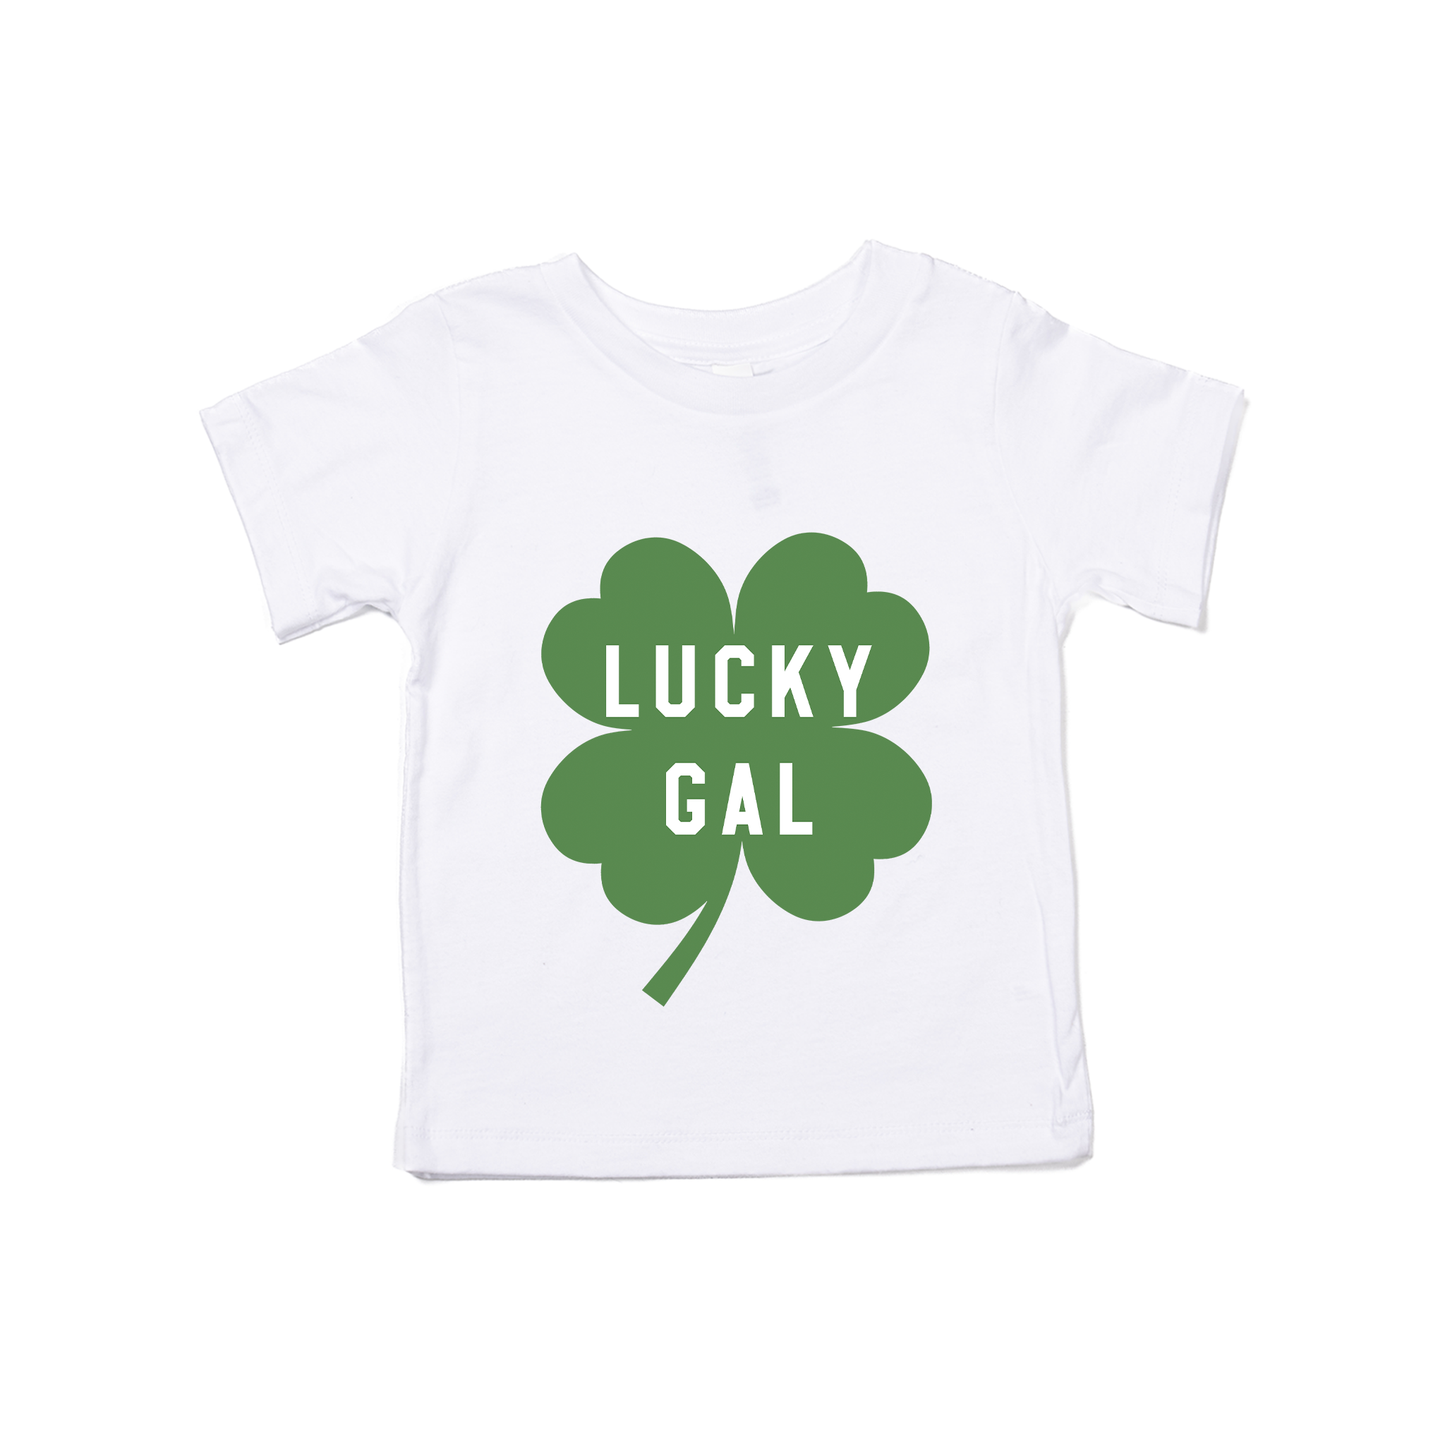 Lucky Gal (St. Patrick's) - Kids Tee (White)